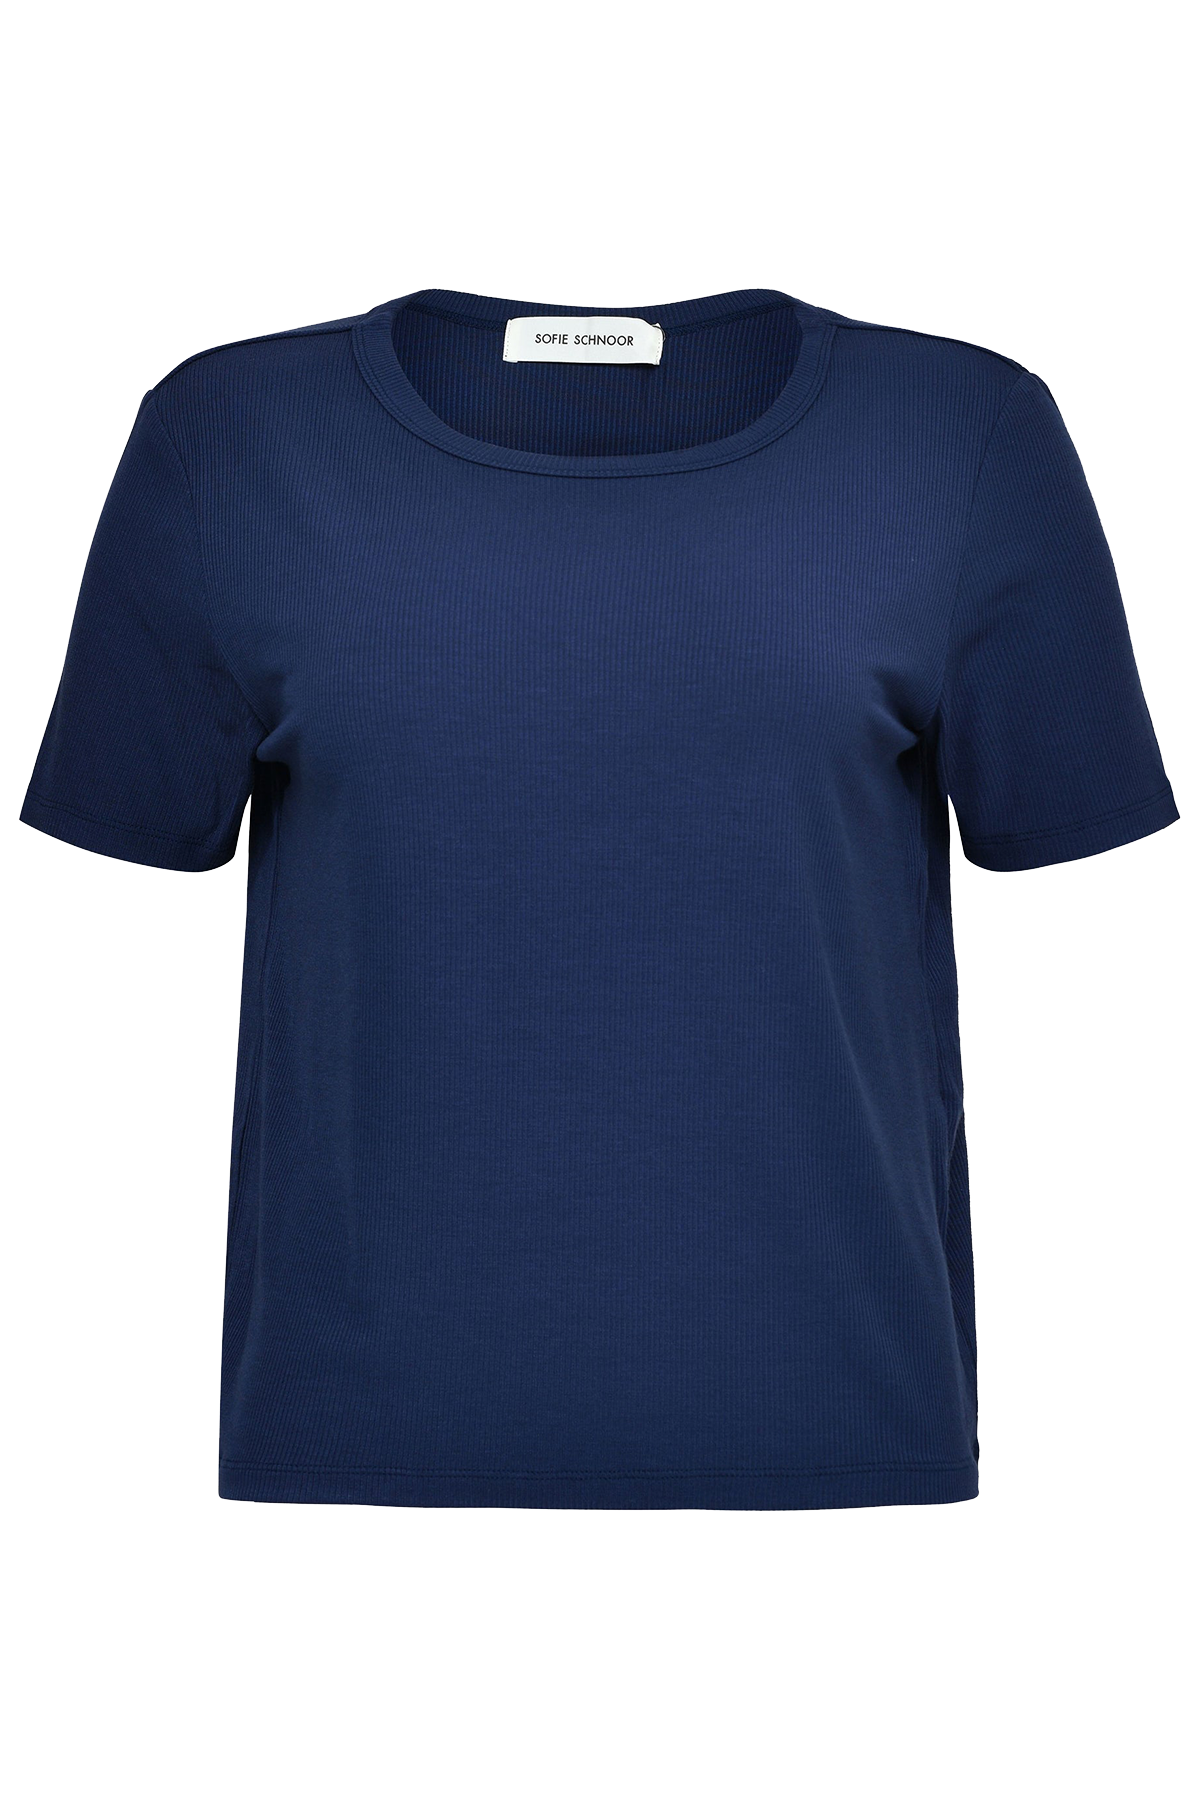 Sofie Schnoor T-shirt Snos, Farve: Blå, Størrelse: XS, Dame